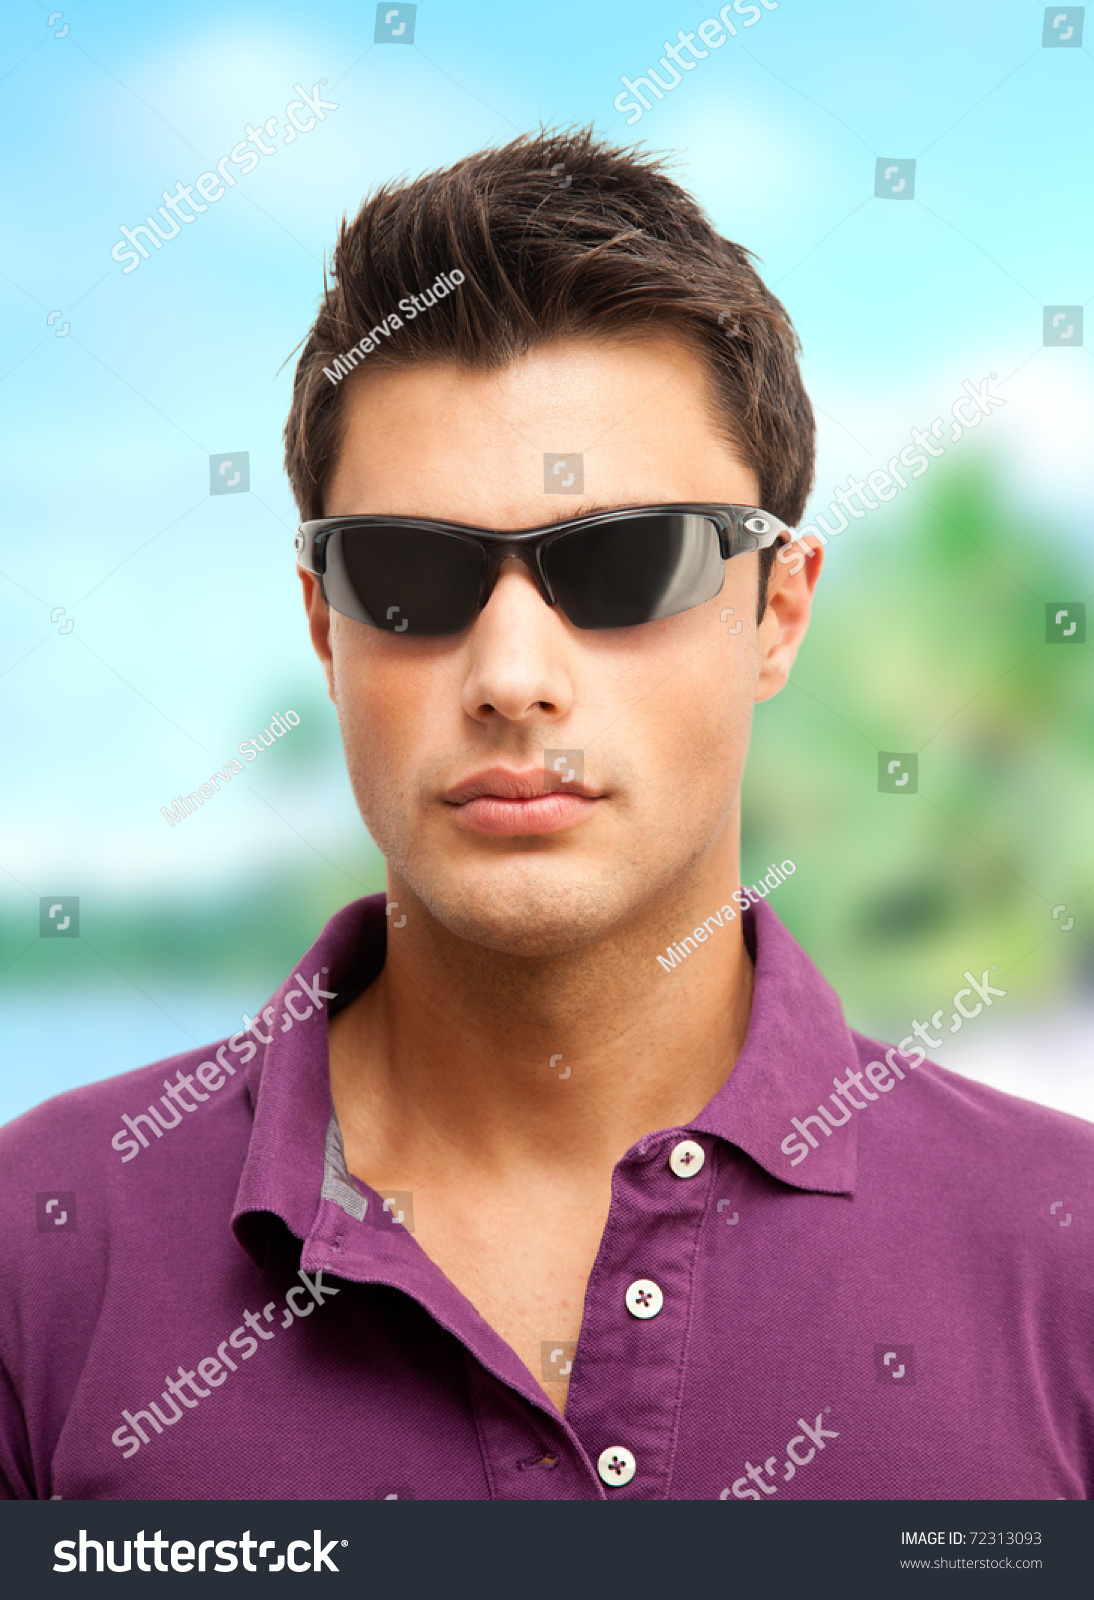 Young Man Wearing Sunglasses And A Purple Shirt Enjoying His Vacation ...